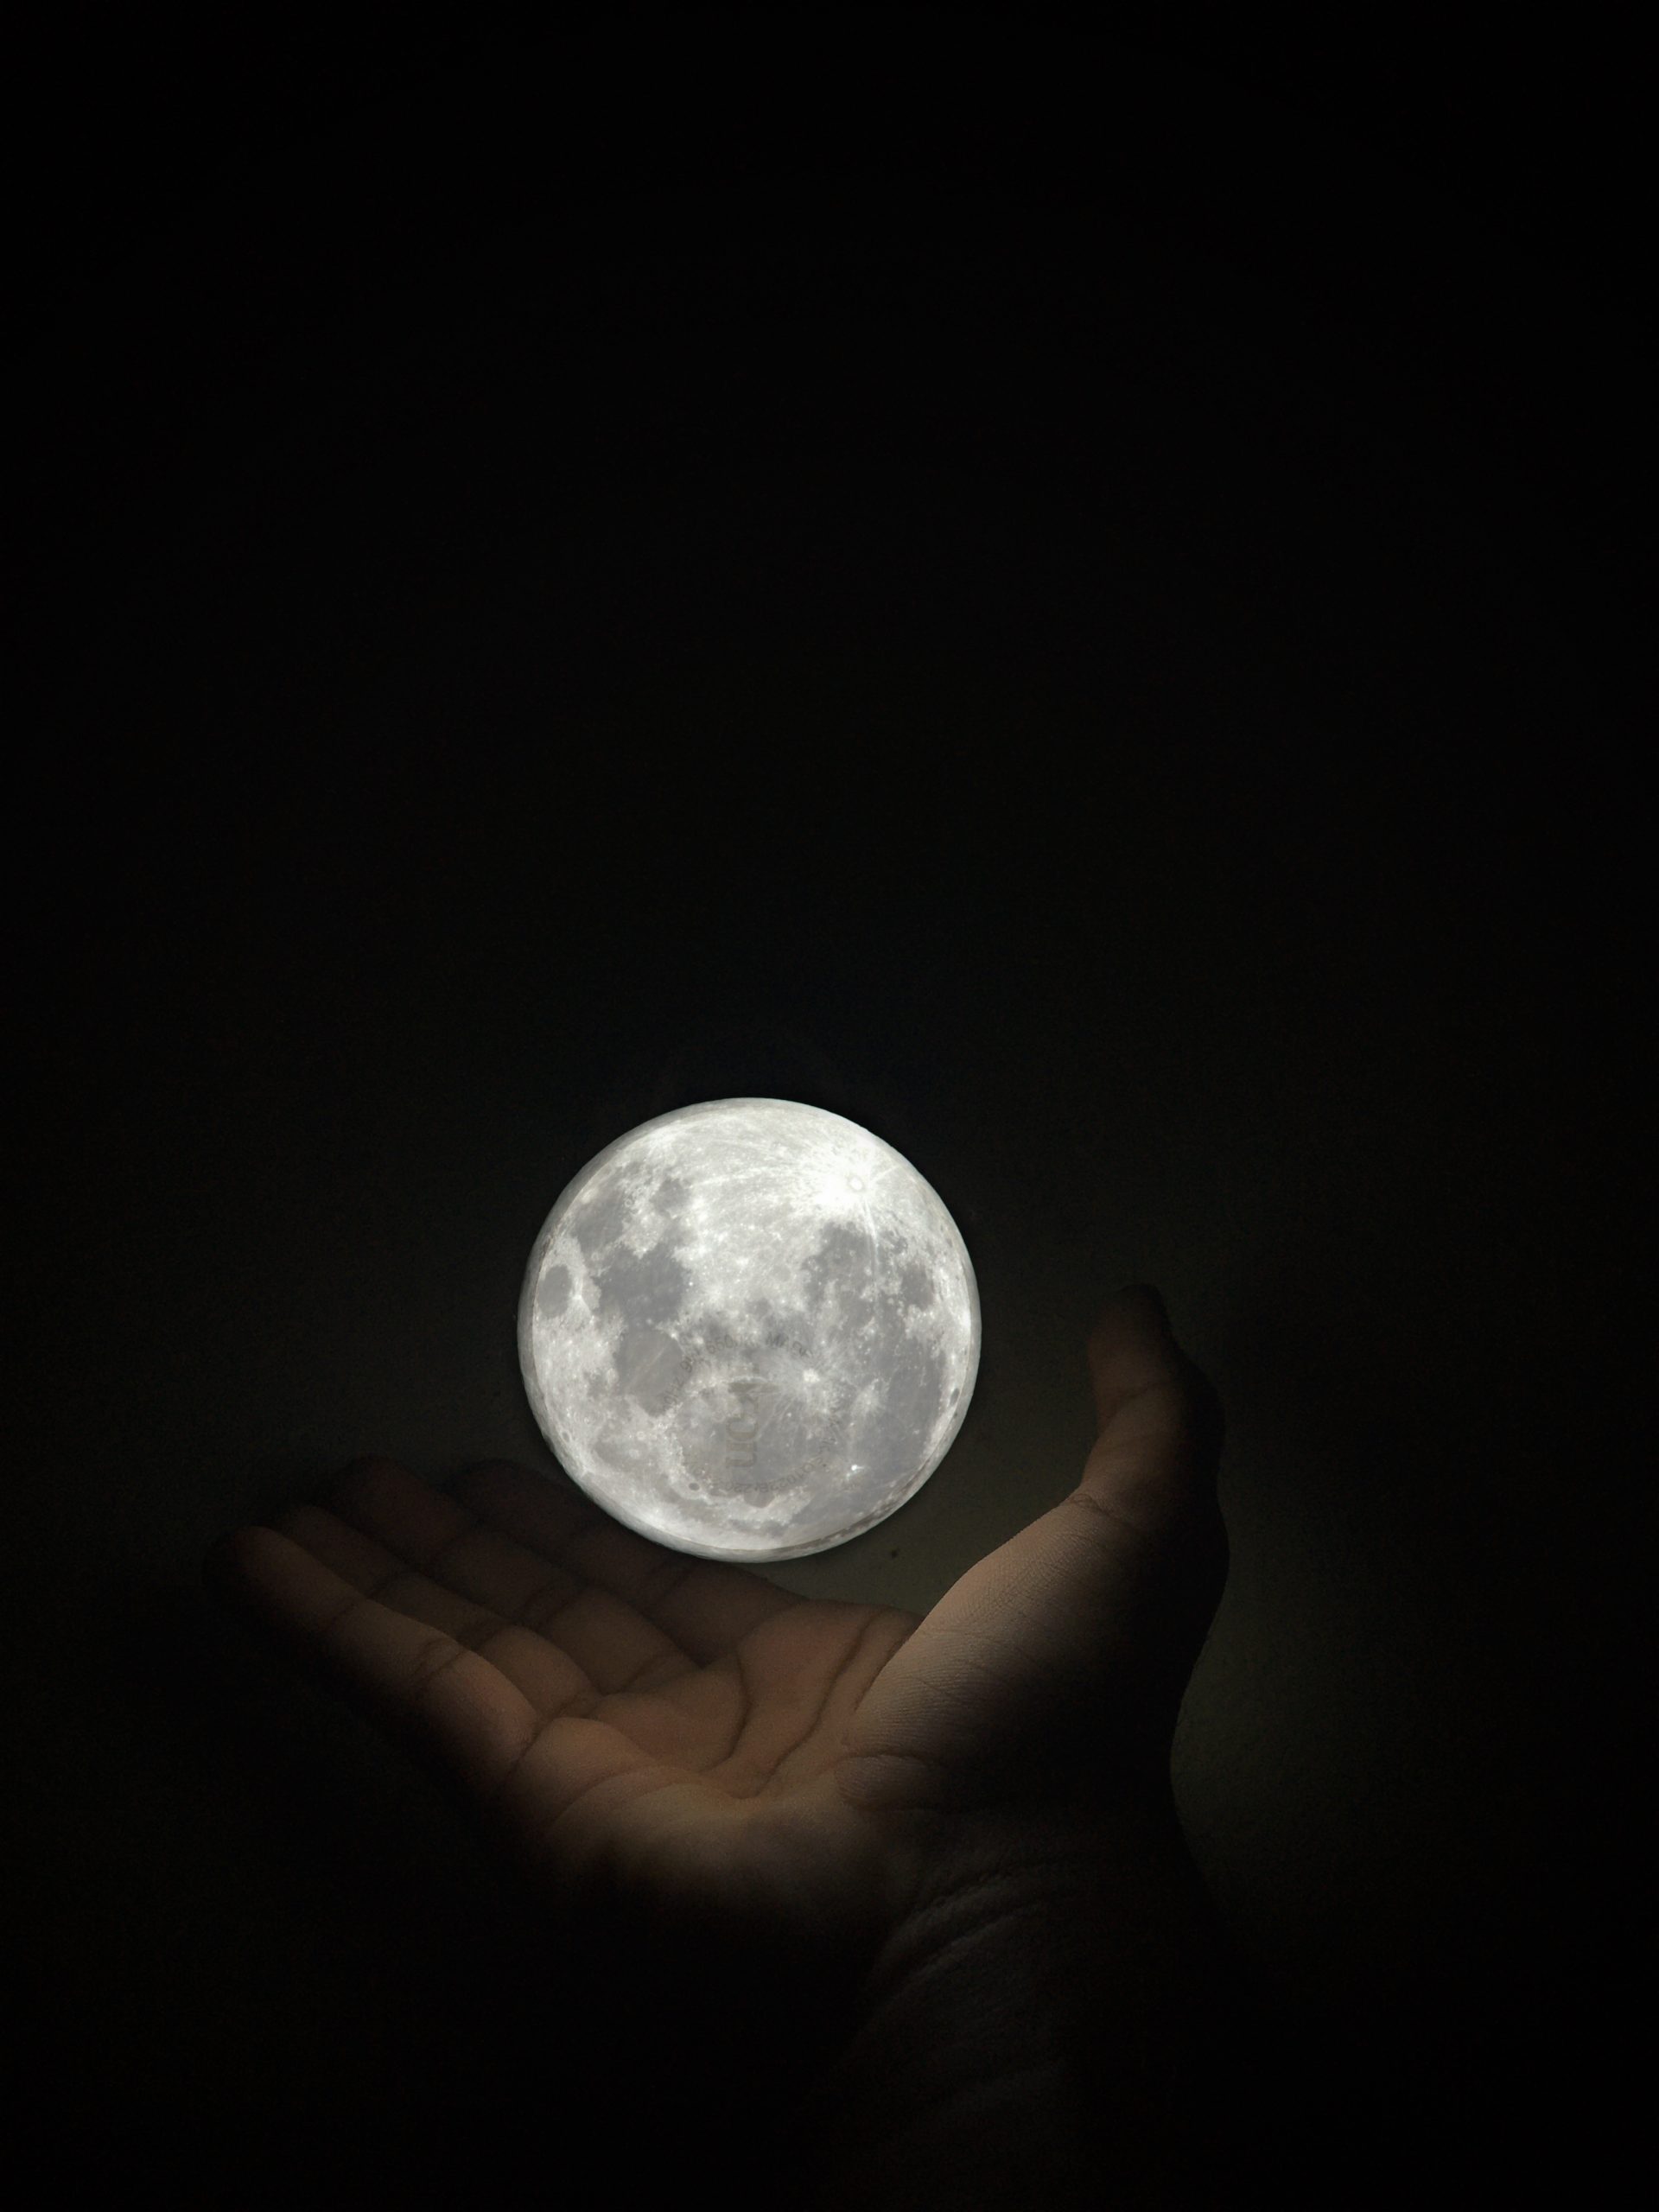 Depicting moon in hand